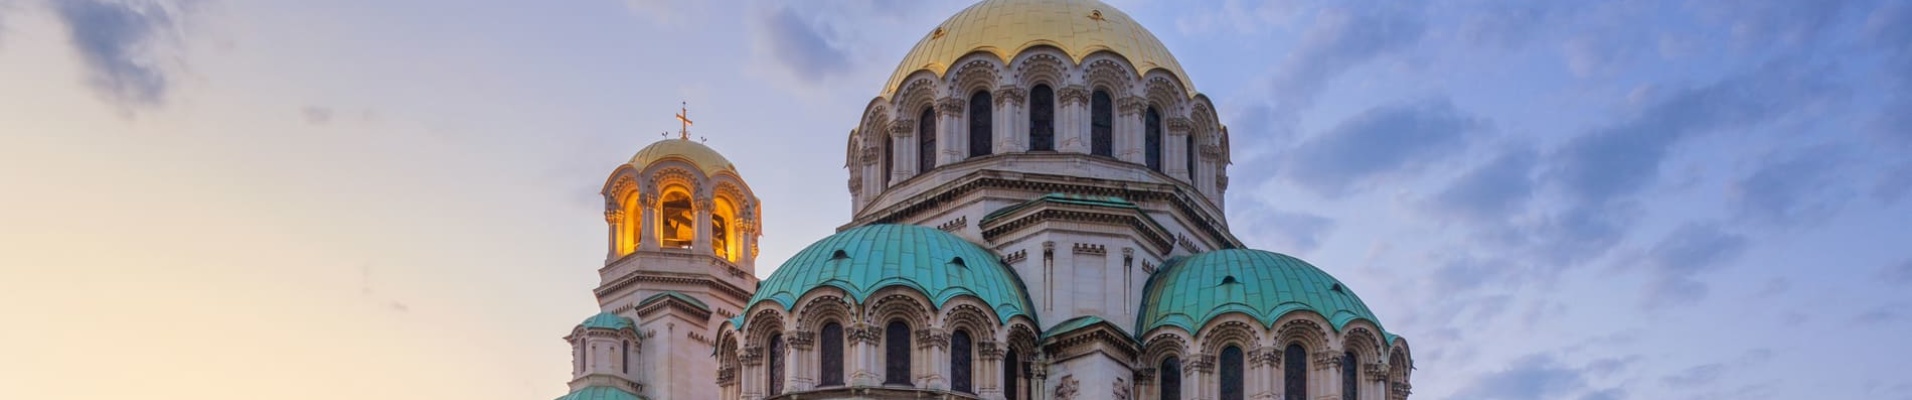 Cathédrale Alexandre Nevski - Sofia - Bulgarie